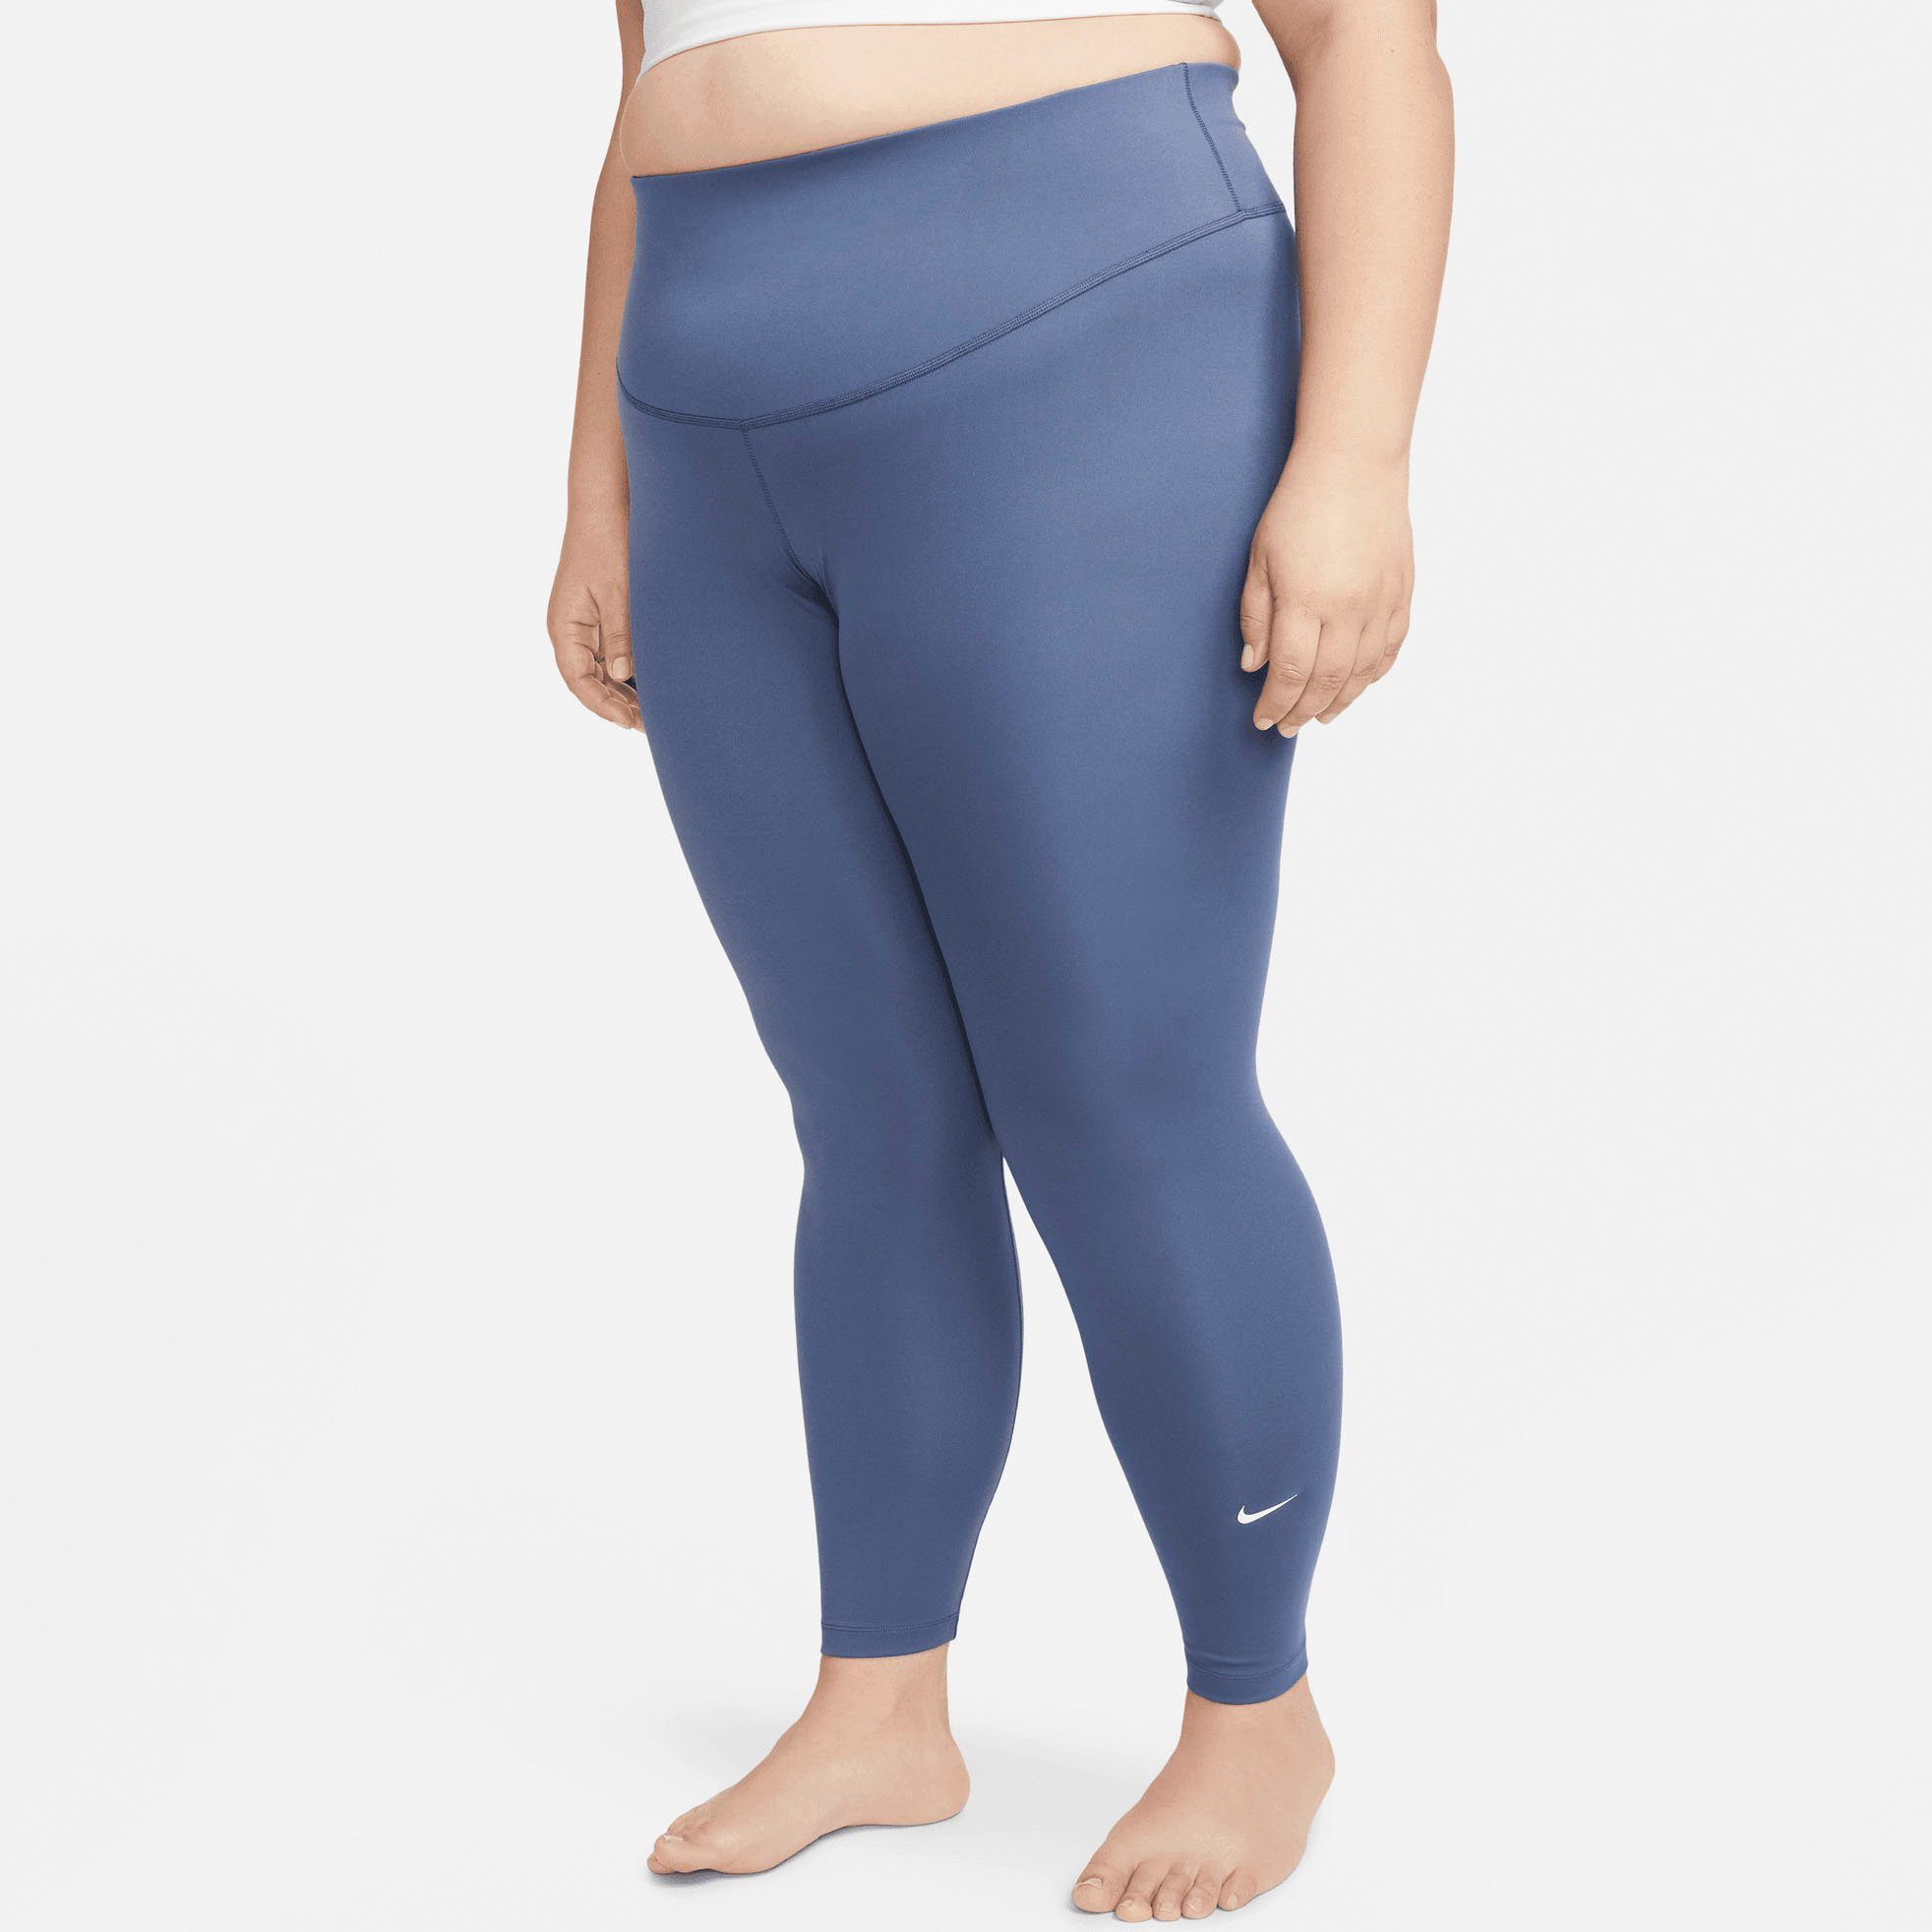 Nike Trainingstights One Women's Mid-Rise Size) Leggings blau (Plus